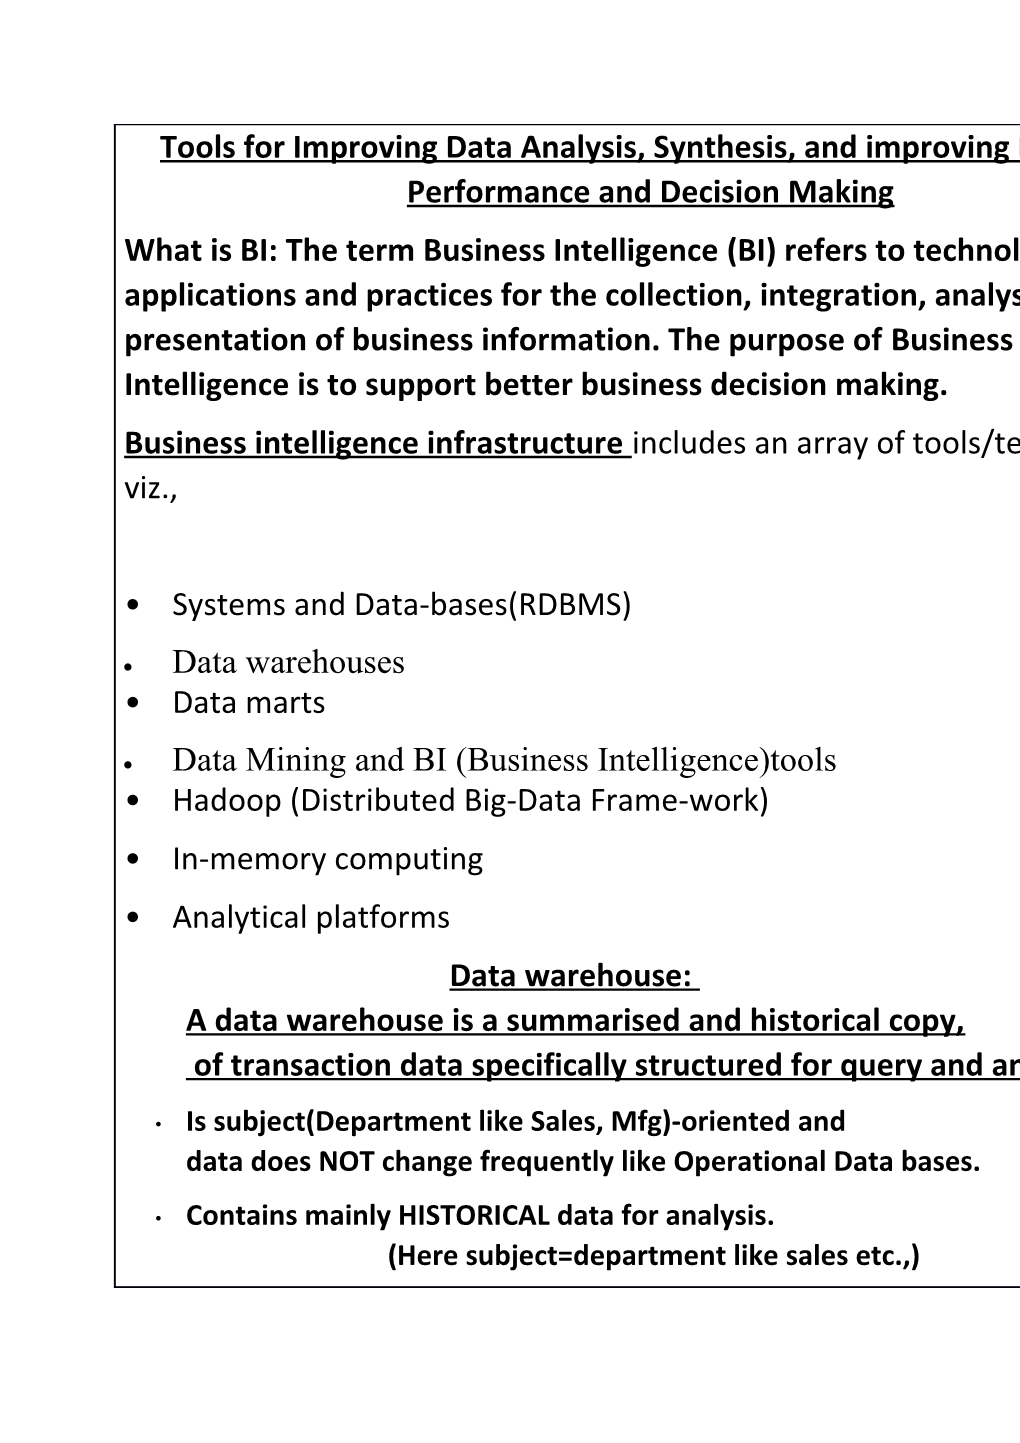 Data Mining and BI (Business Intelligence)Tools